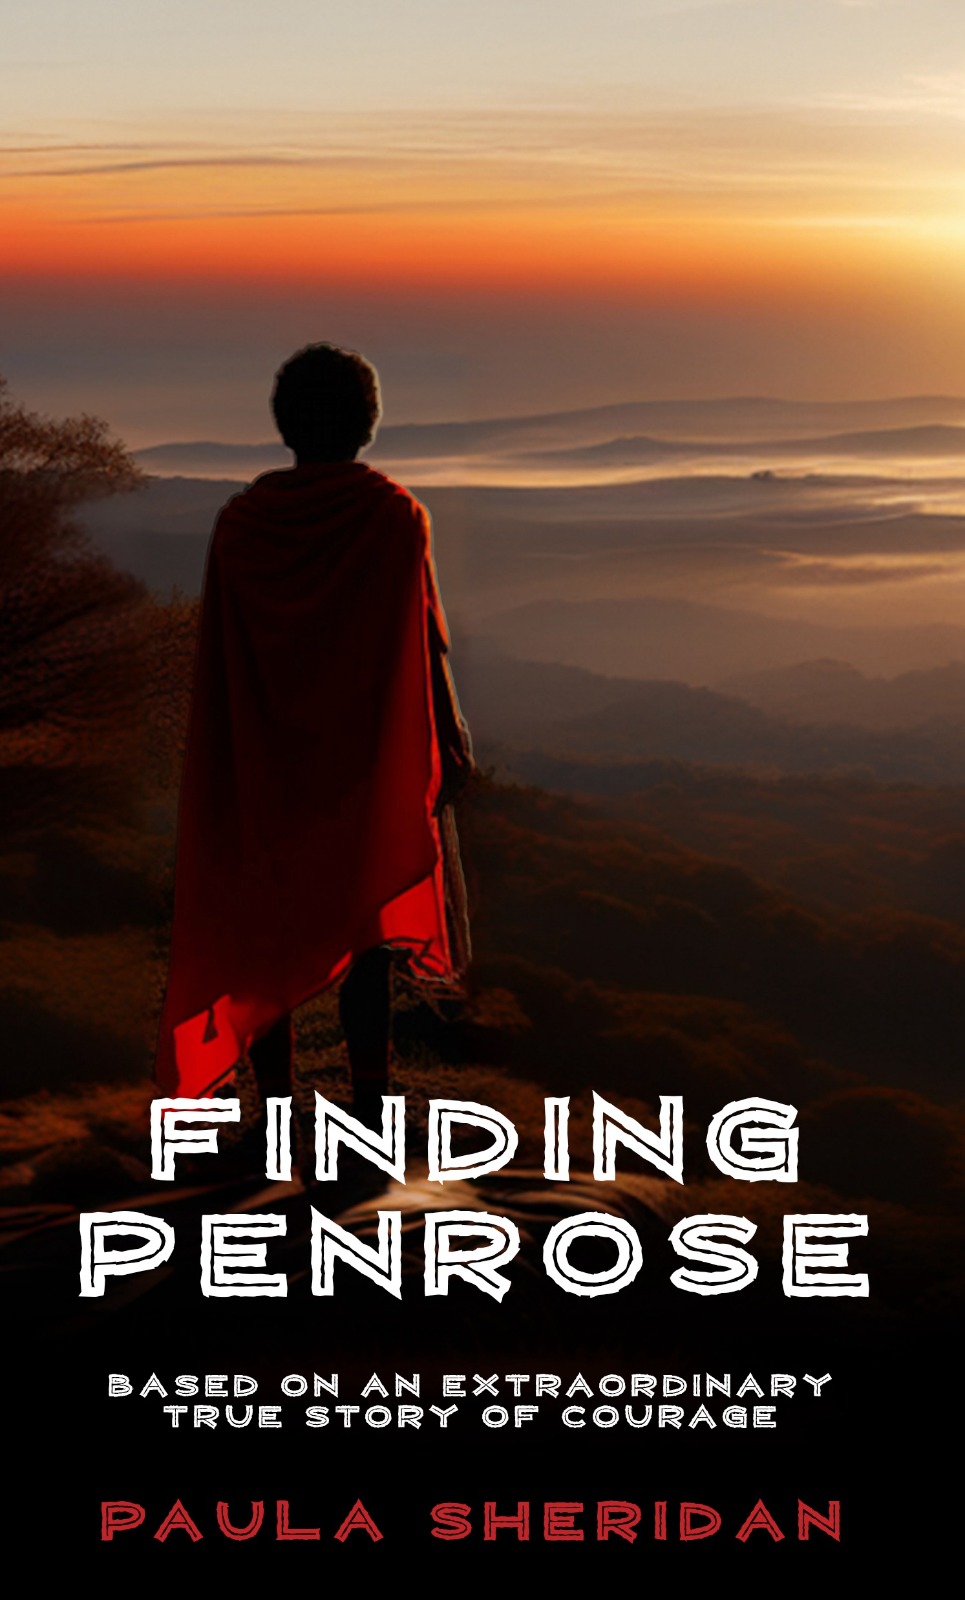 Finding Penrose by Paula Sheridan